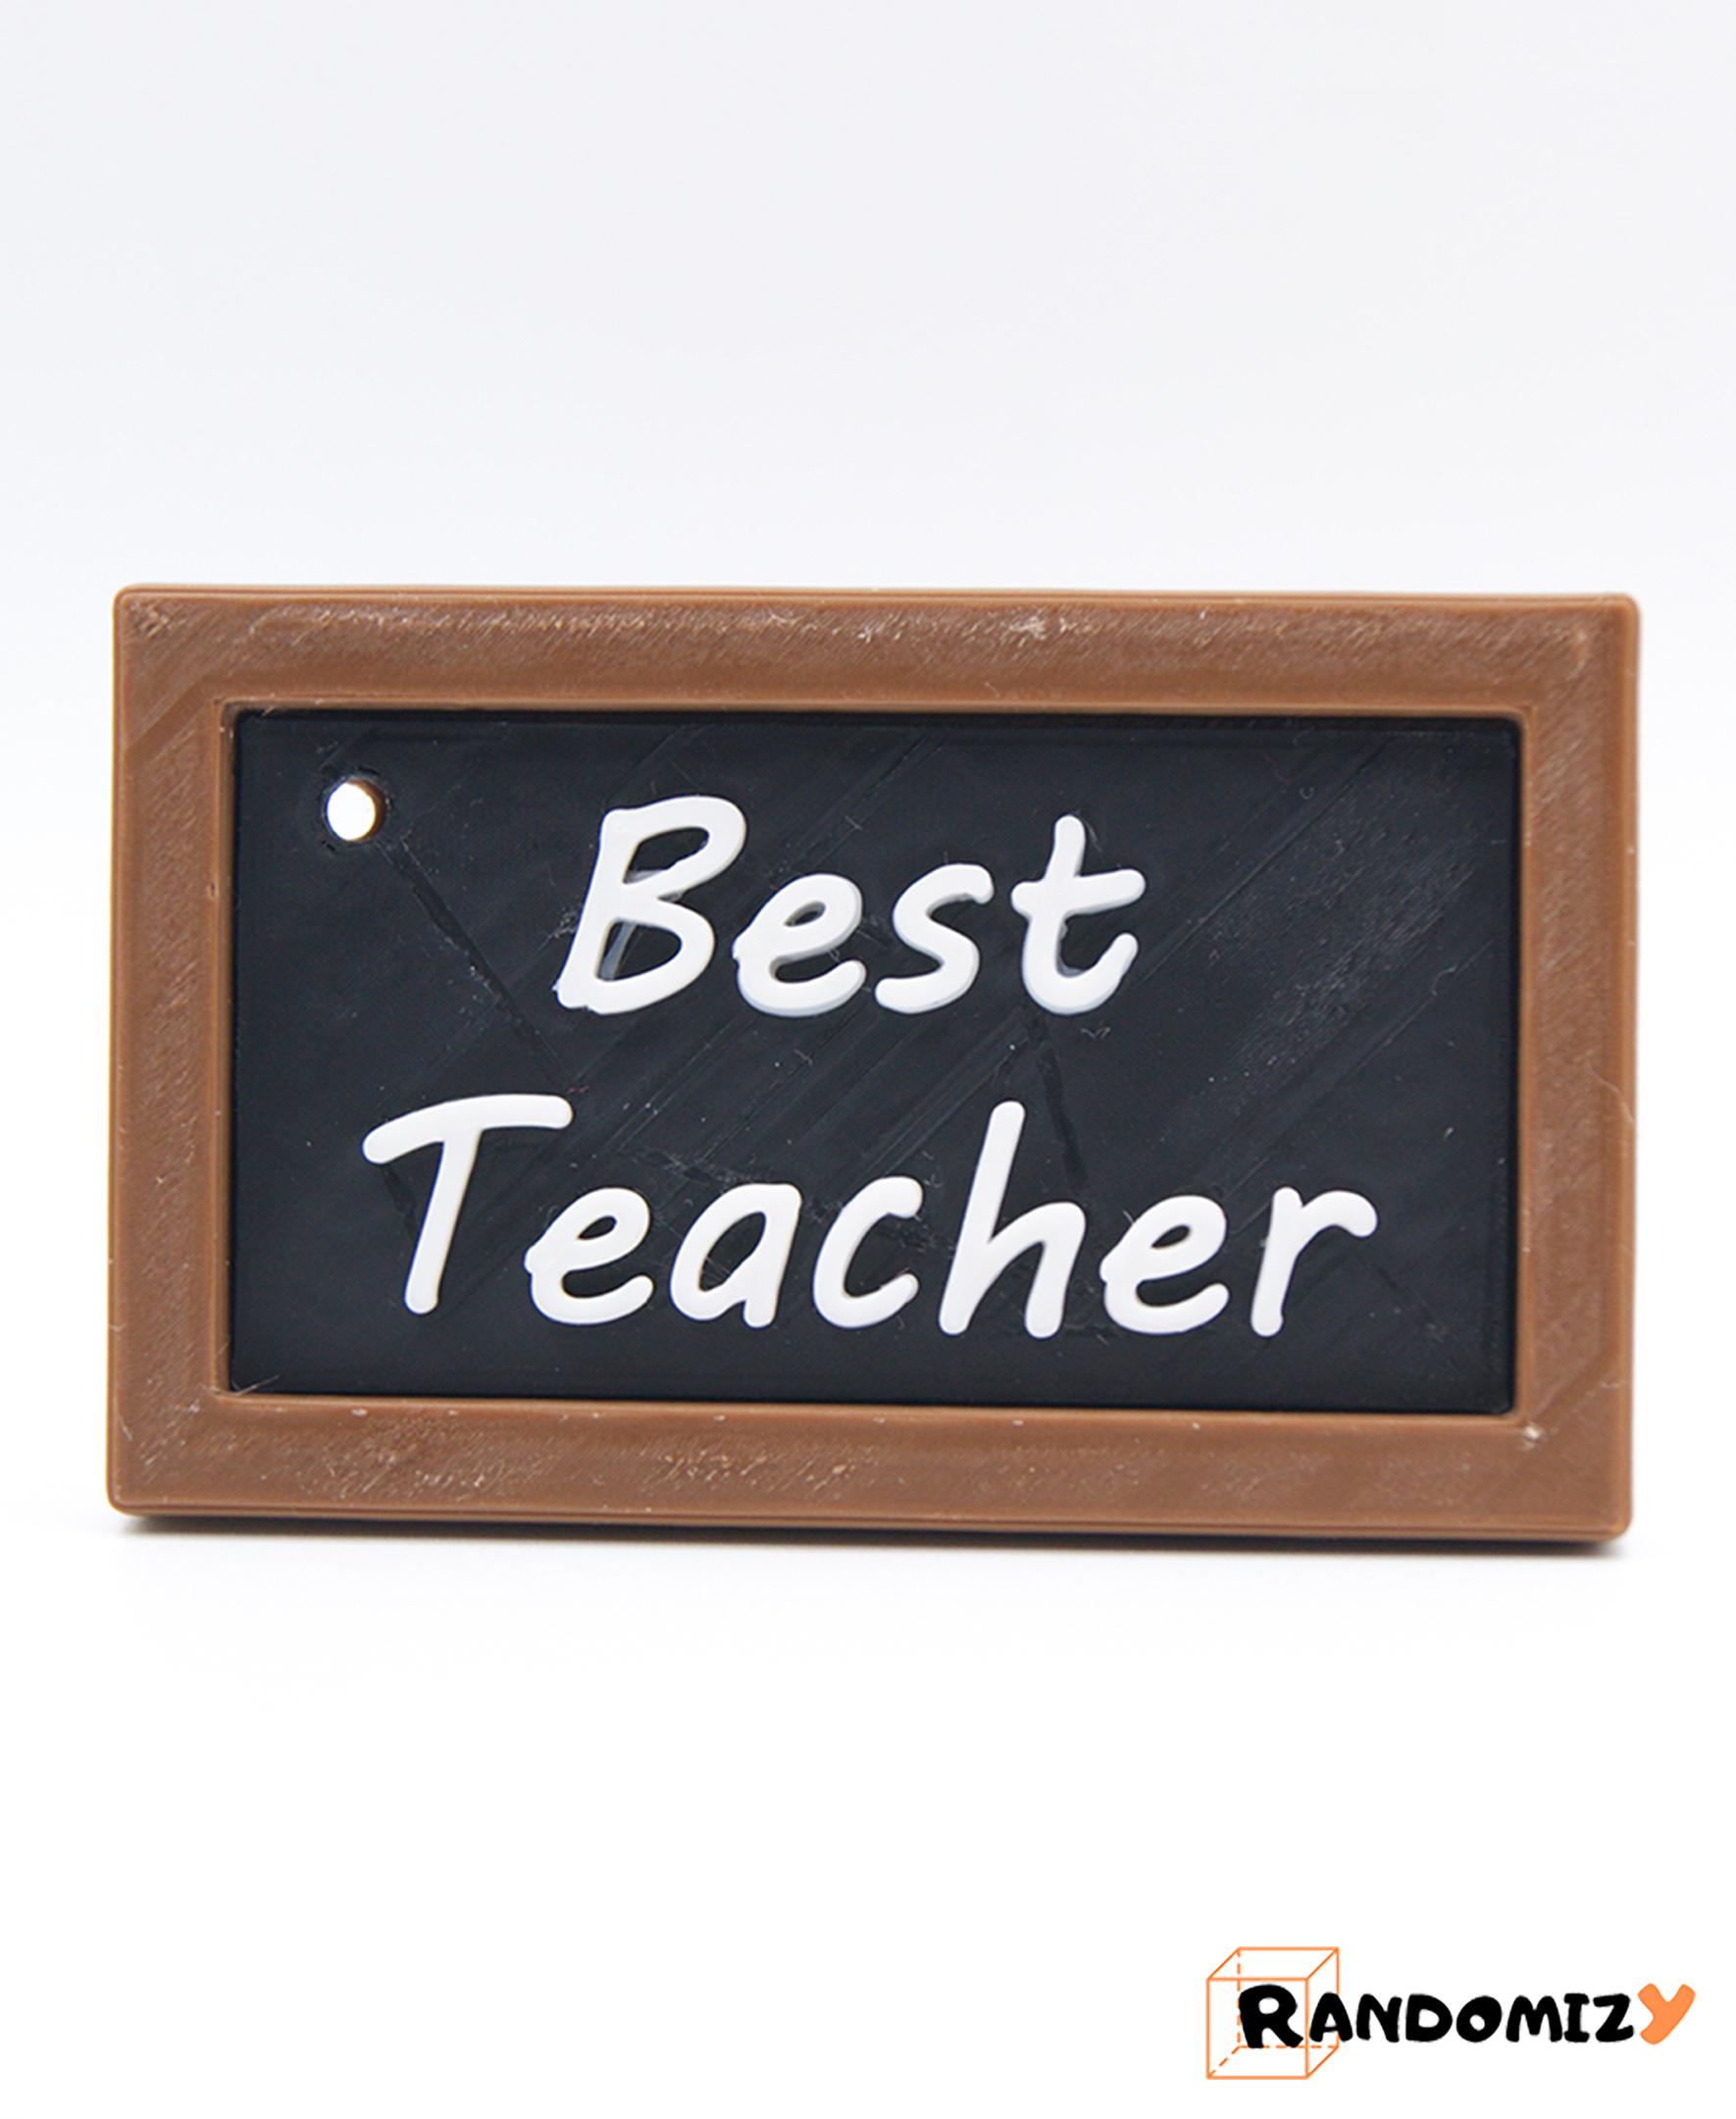 Best Teacher (Keychain) 3d model